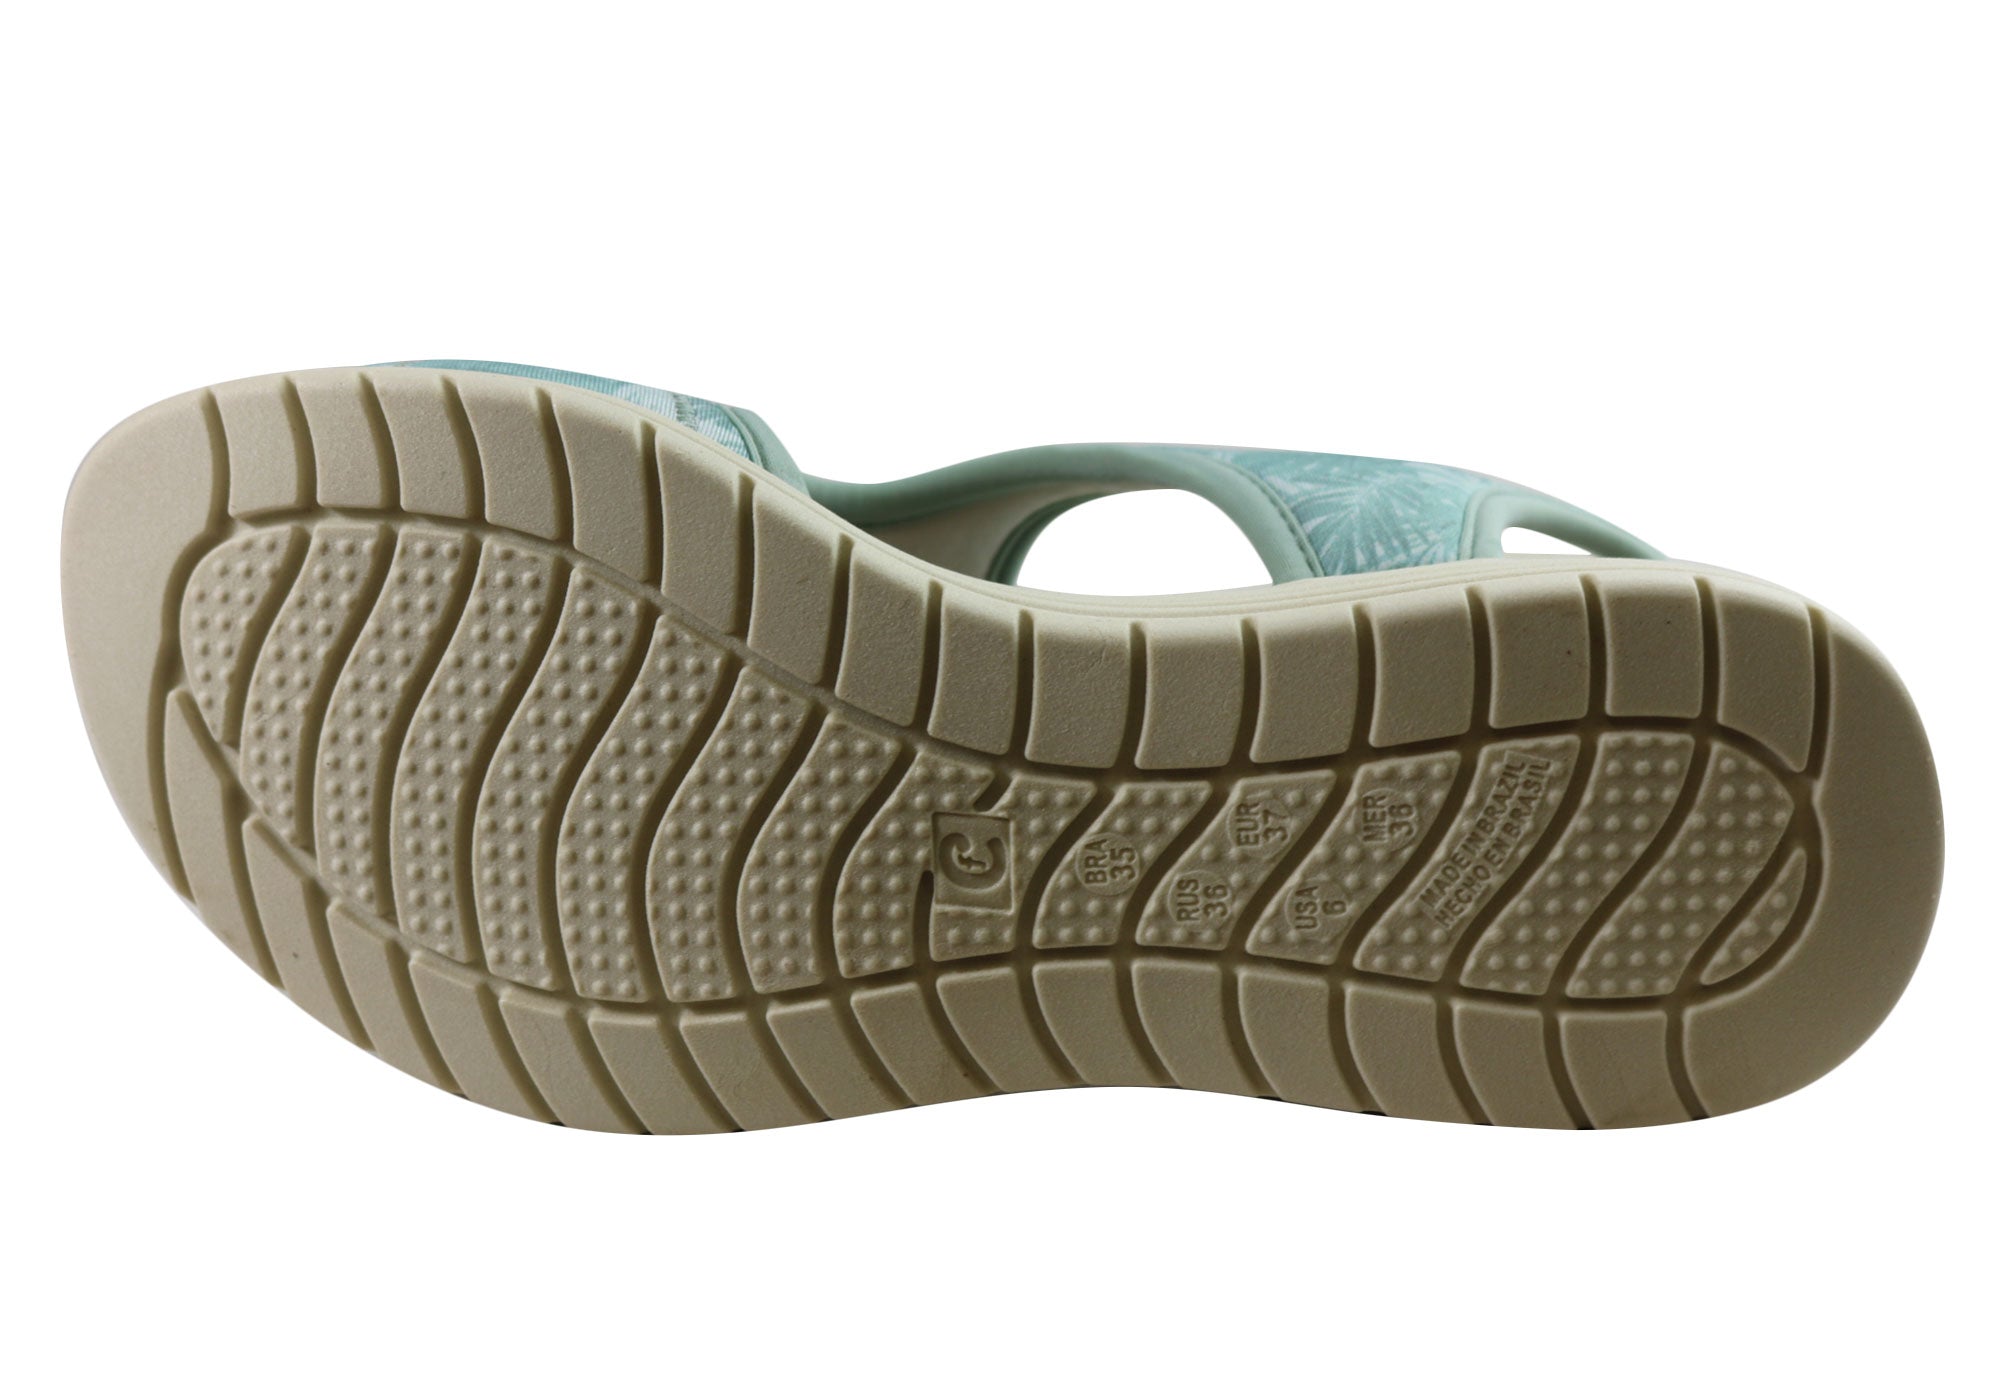 Comfortflex Horizon Womens Comfortable Sandals Made In Brazil